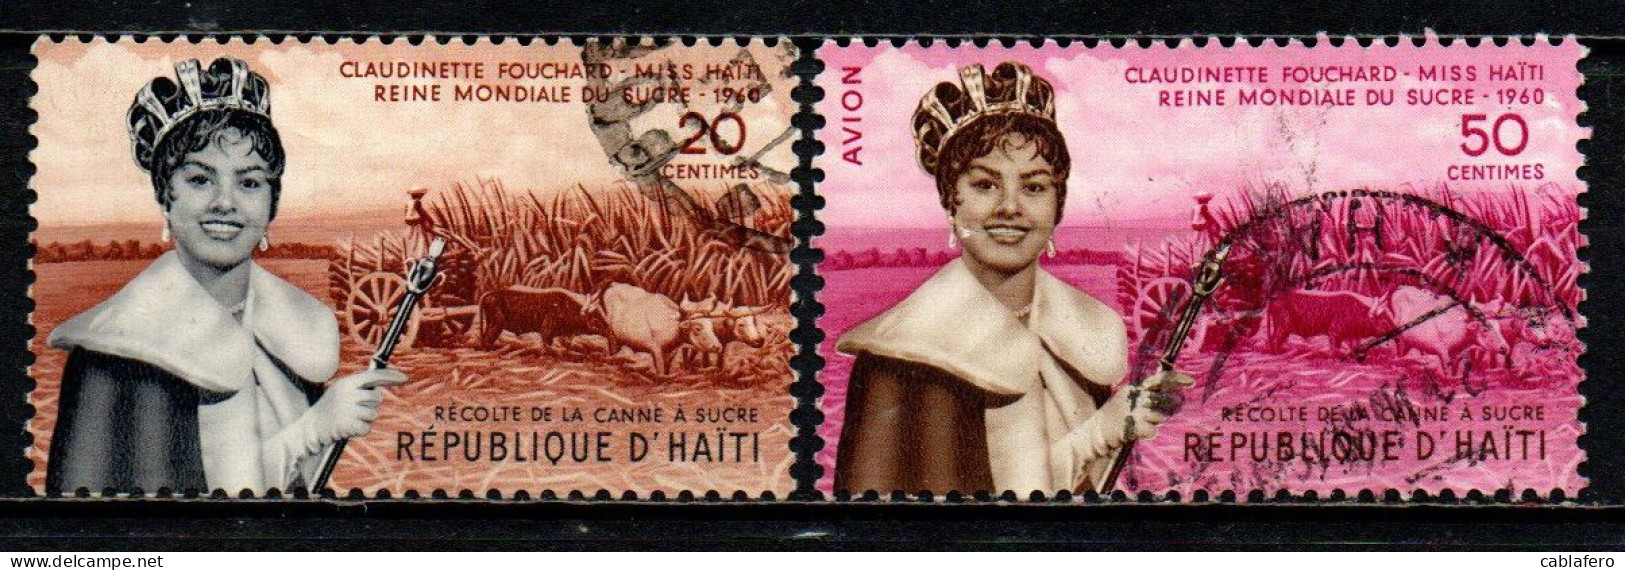 HAITI - 1960 - Claudinette Fouchard, Miss Haiti - Sugar Queen - USATI - Haïti